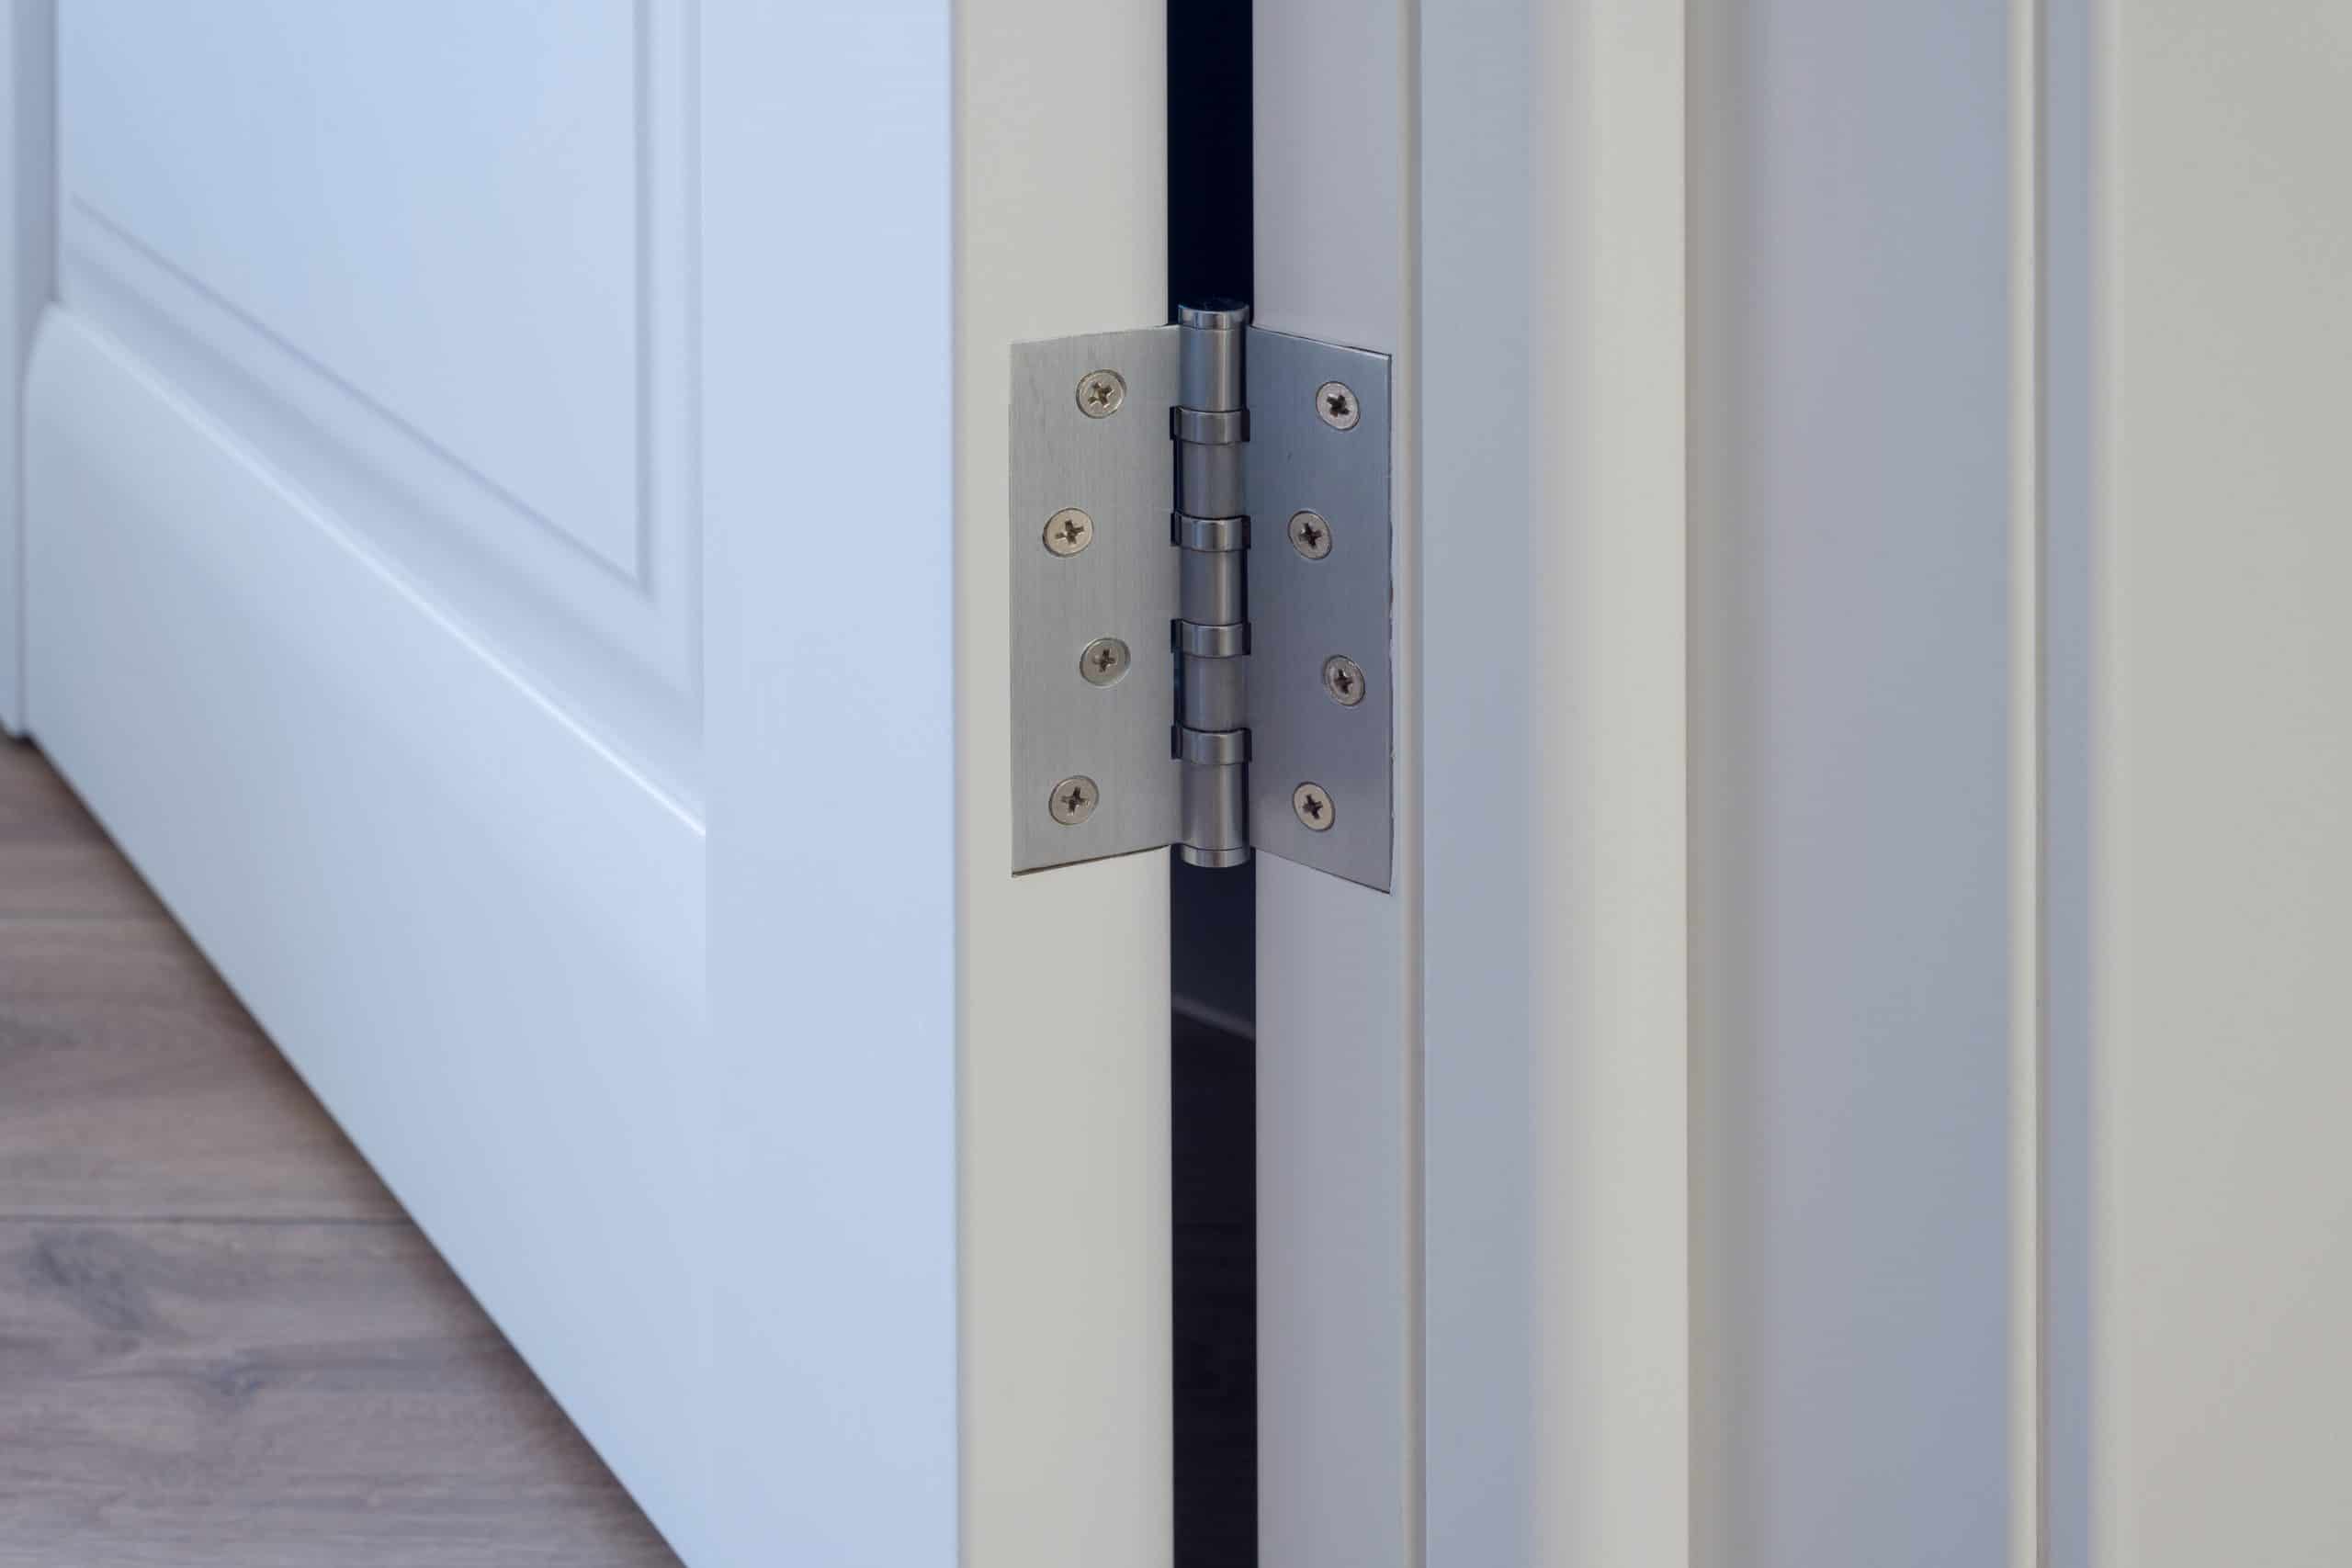 How to Install Door Hinges in 10 Easy Steps